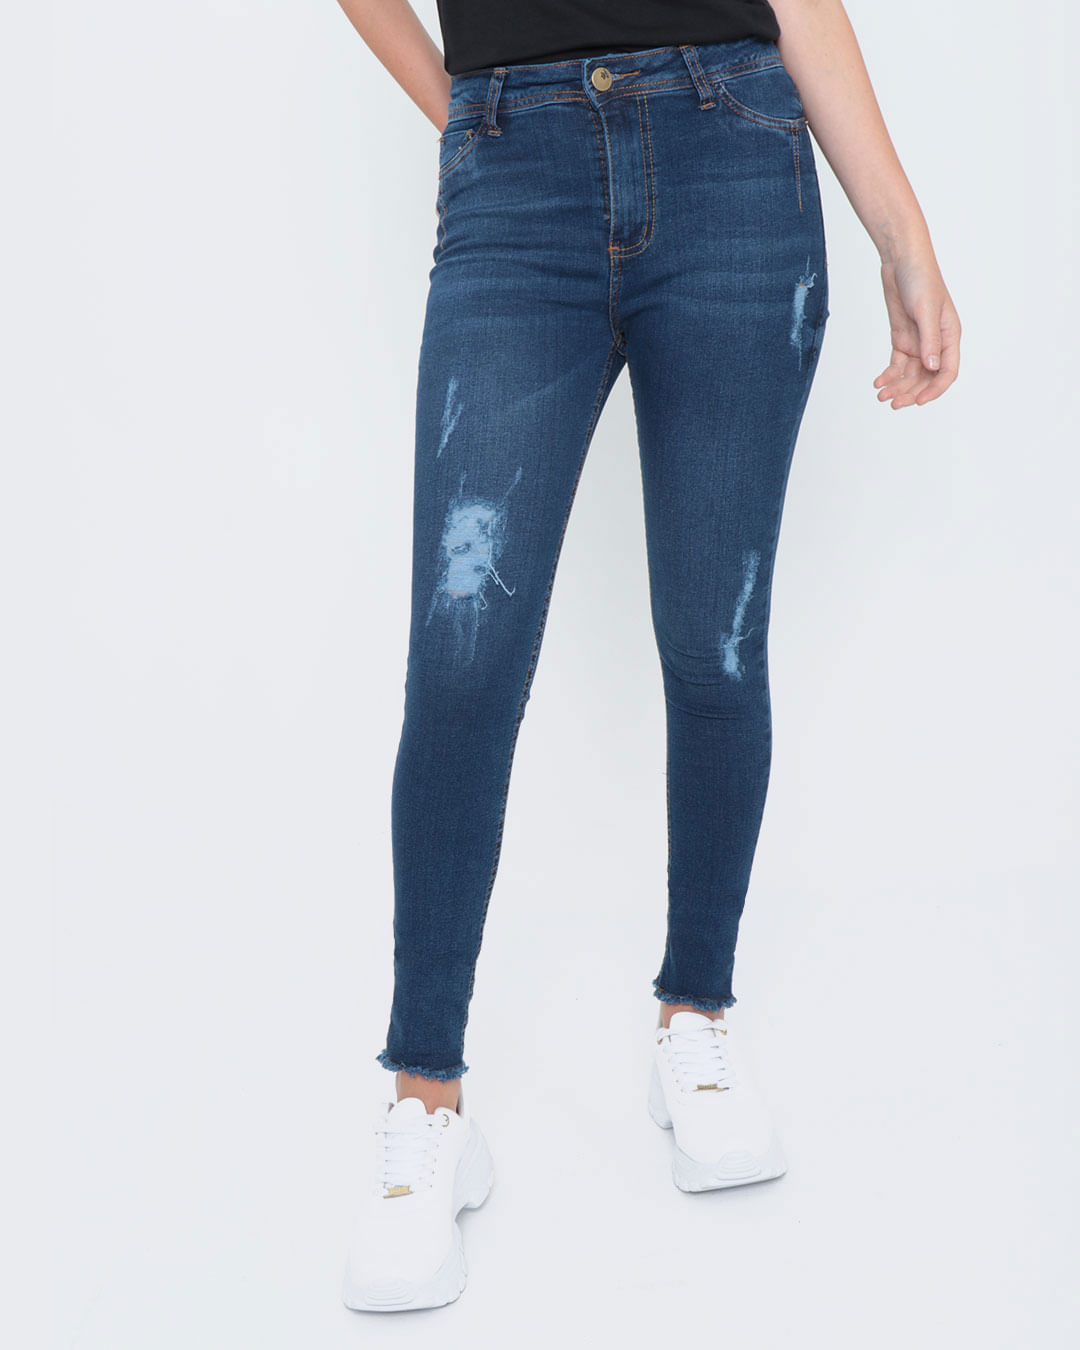 Calca-Jeans-Feminina-Super-Skinny-Puidos-Azul